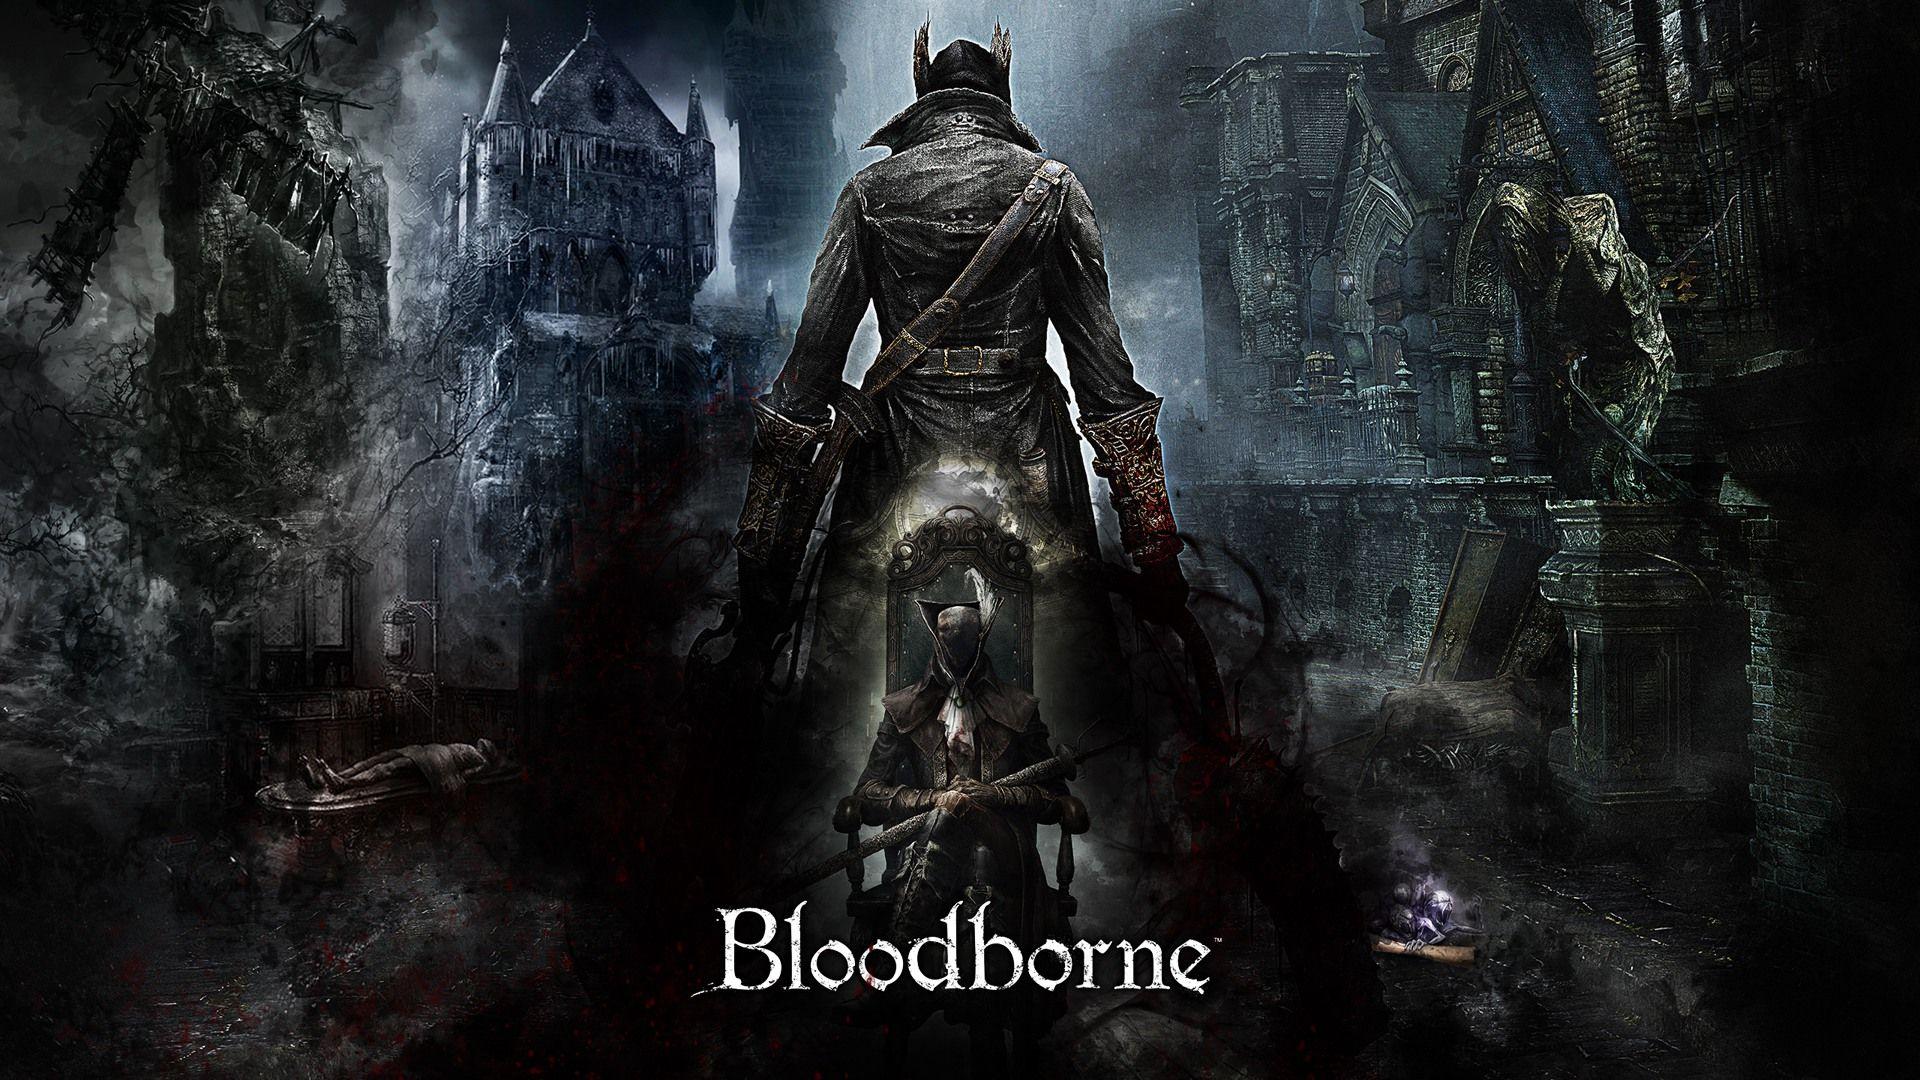 bloodborne free pc download